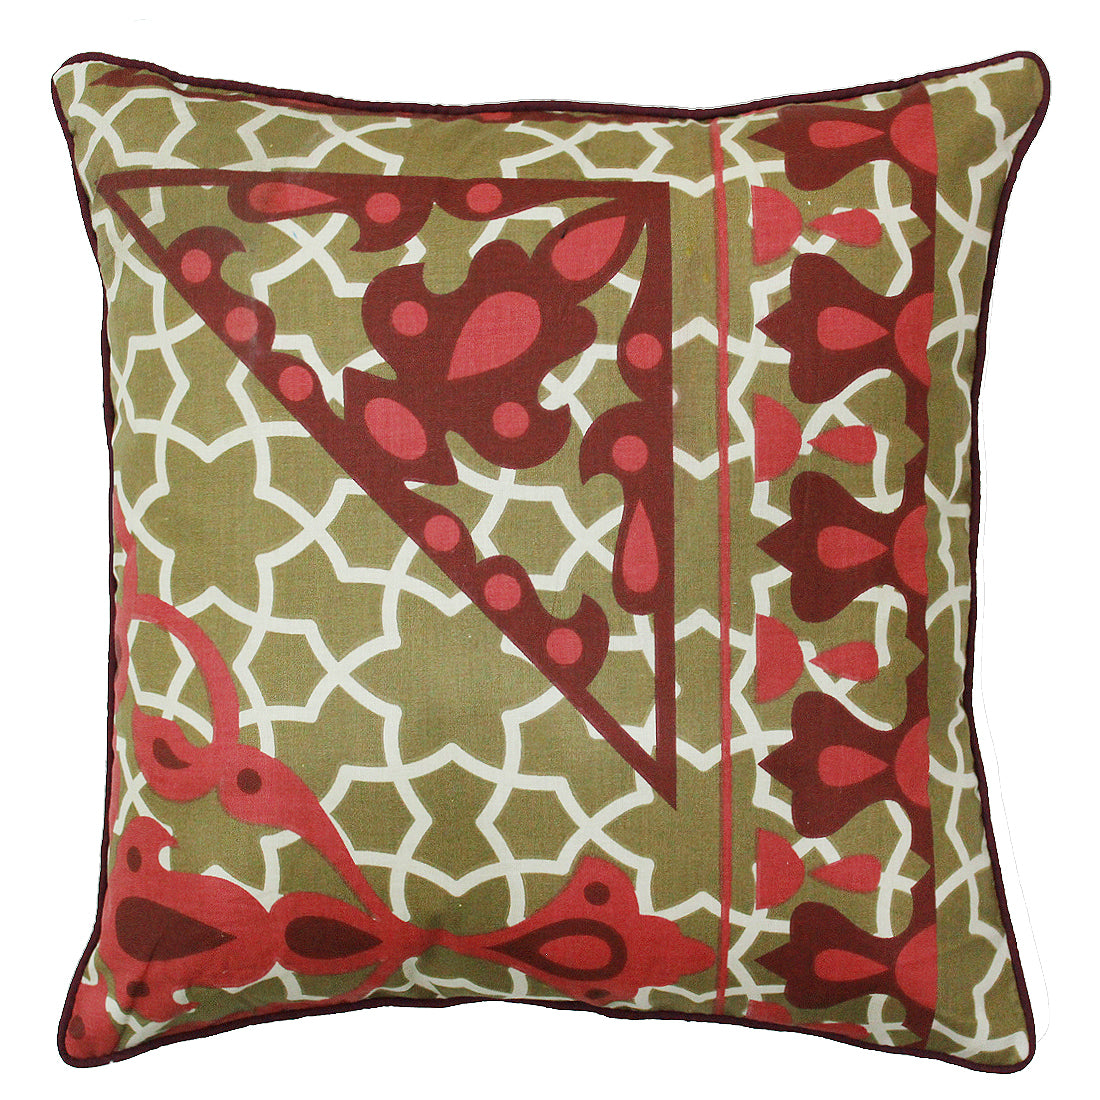 Quartz Printed Abstract Cotton Cushion Cover - Brown